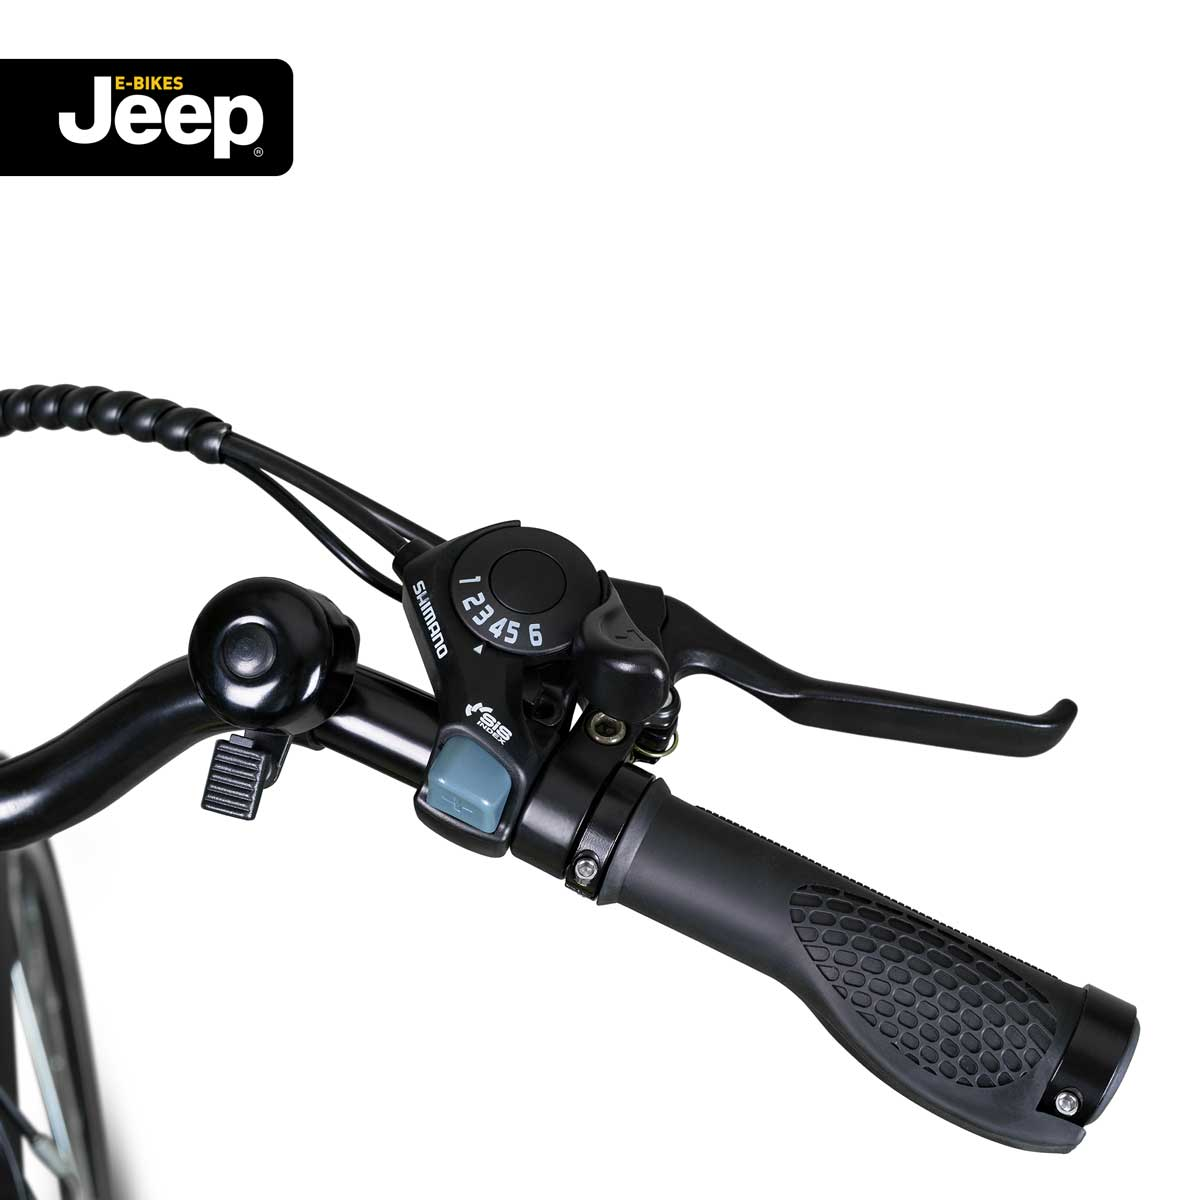 6-Gang Rahmenhöhe: JEEP Wh, 374,4 Kettenschaltung, 28”, ECR Zoll, 28 Jeep cm, 44 Erwachsene-Rad, E-Bike City Citybike 3000, SHIMANO E-BIKES (Laufradgröße: black black)